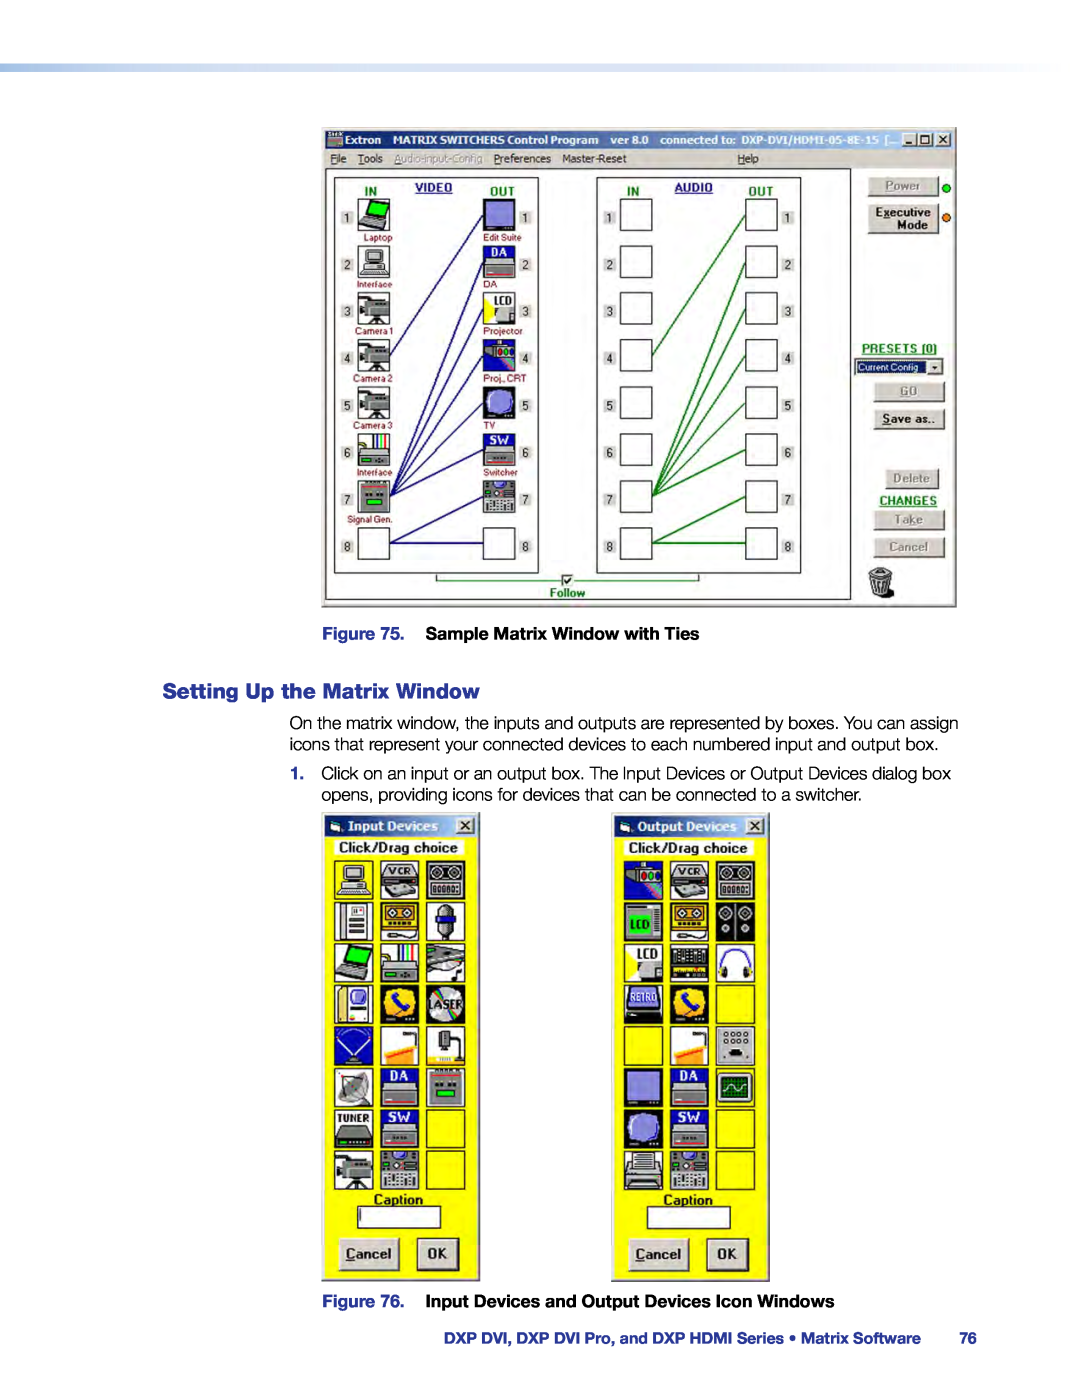 Extron electronic DXP DVI PRO manual Setting Up the Matrix Window, Sample Matrix Window with Ties 